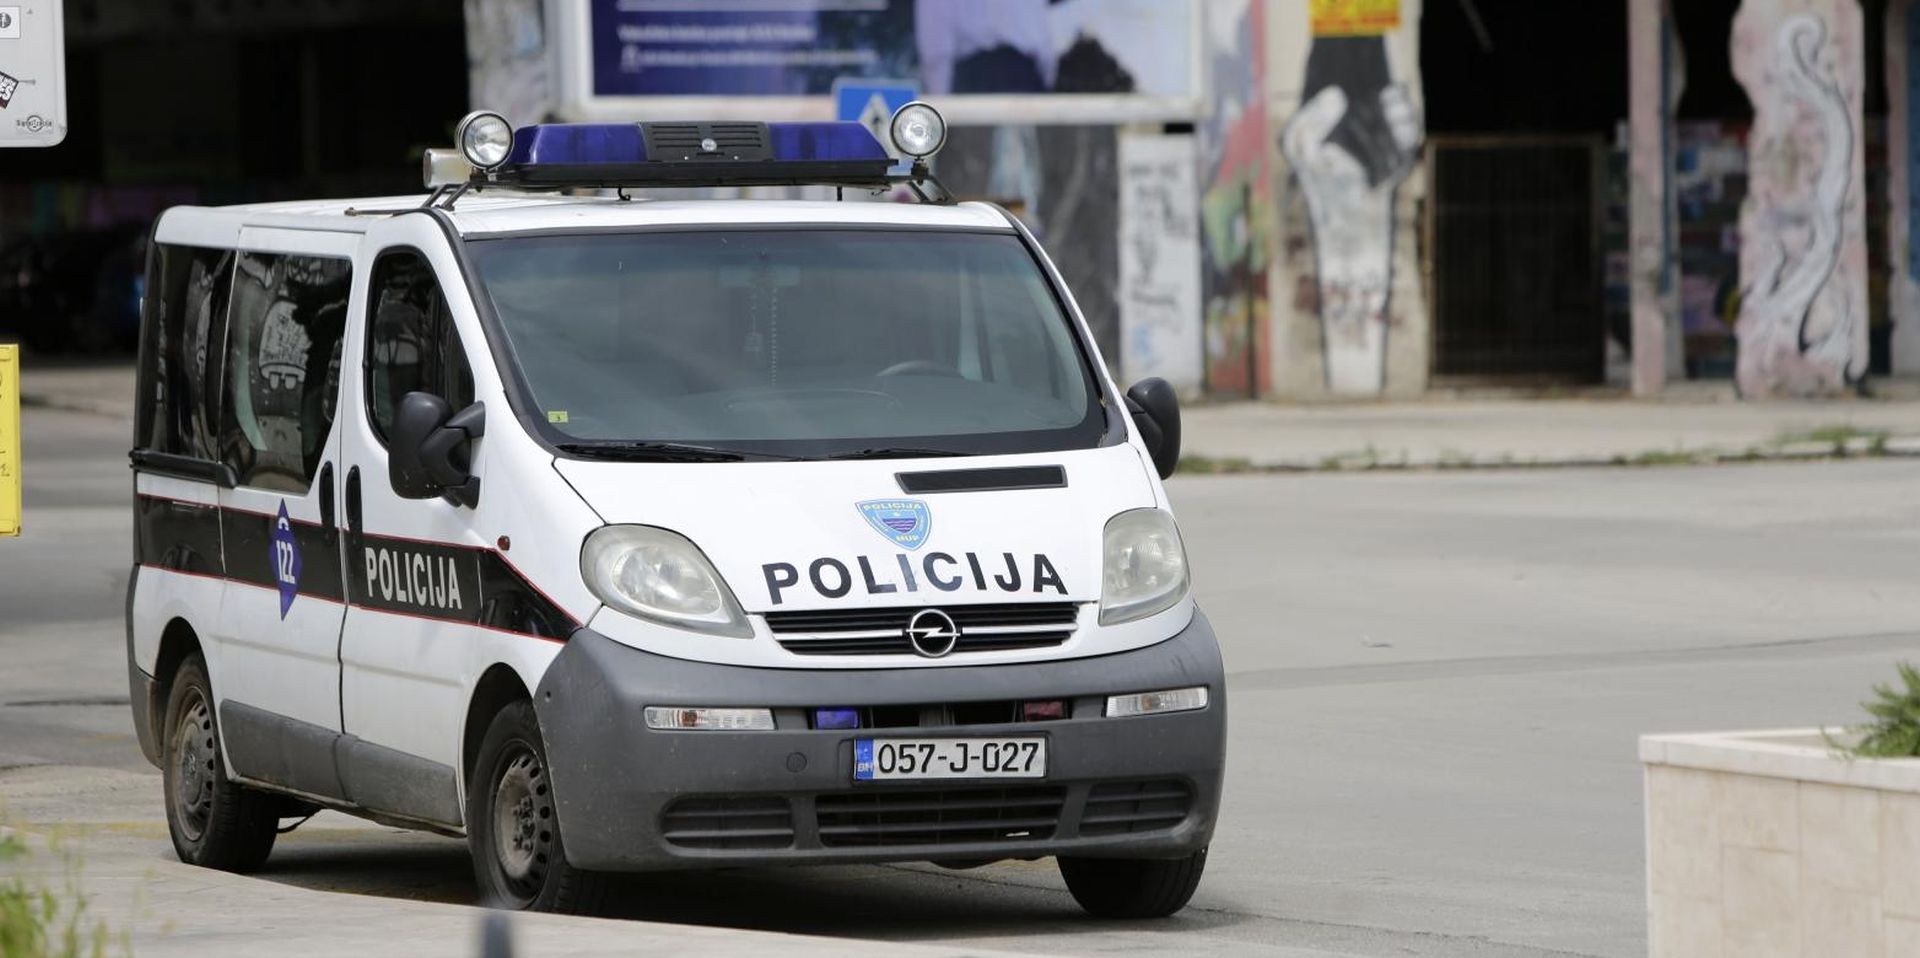 08.08.2020. Mostar: Nakon navijackih sukoba, grad pun policije 

Denis Kapetanovic/PIXSELL